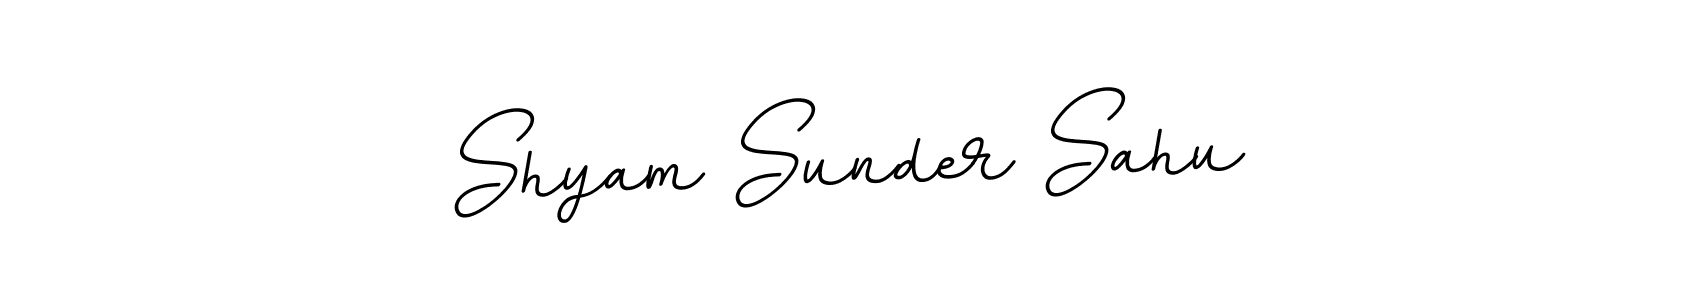 How to Draw Shyam Sunder Sahu signature style? BallpointsItalic-DORy9 is a latest design signature styles for name Shyam Sunder Sahu. Shyam Sunder Sahu signature style 11 images and pictures png